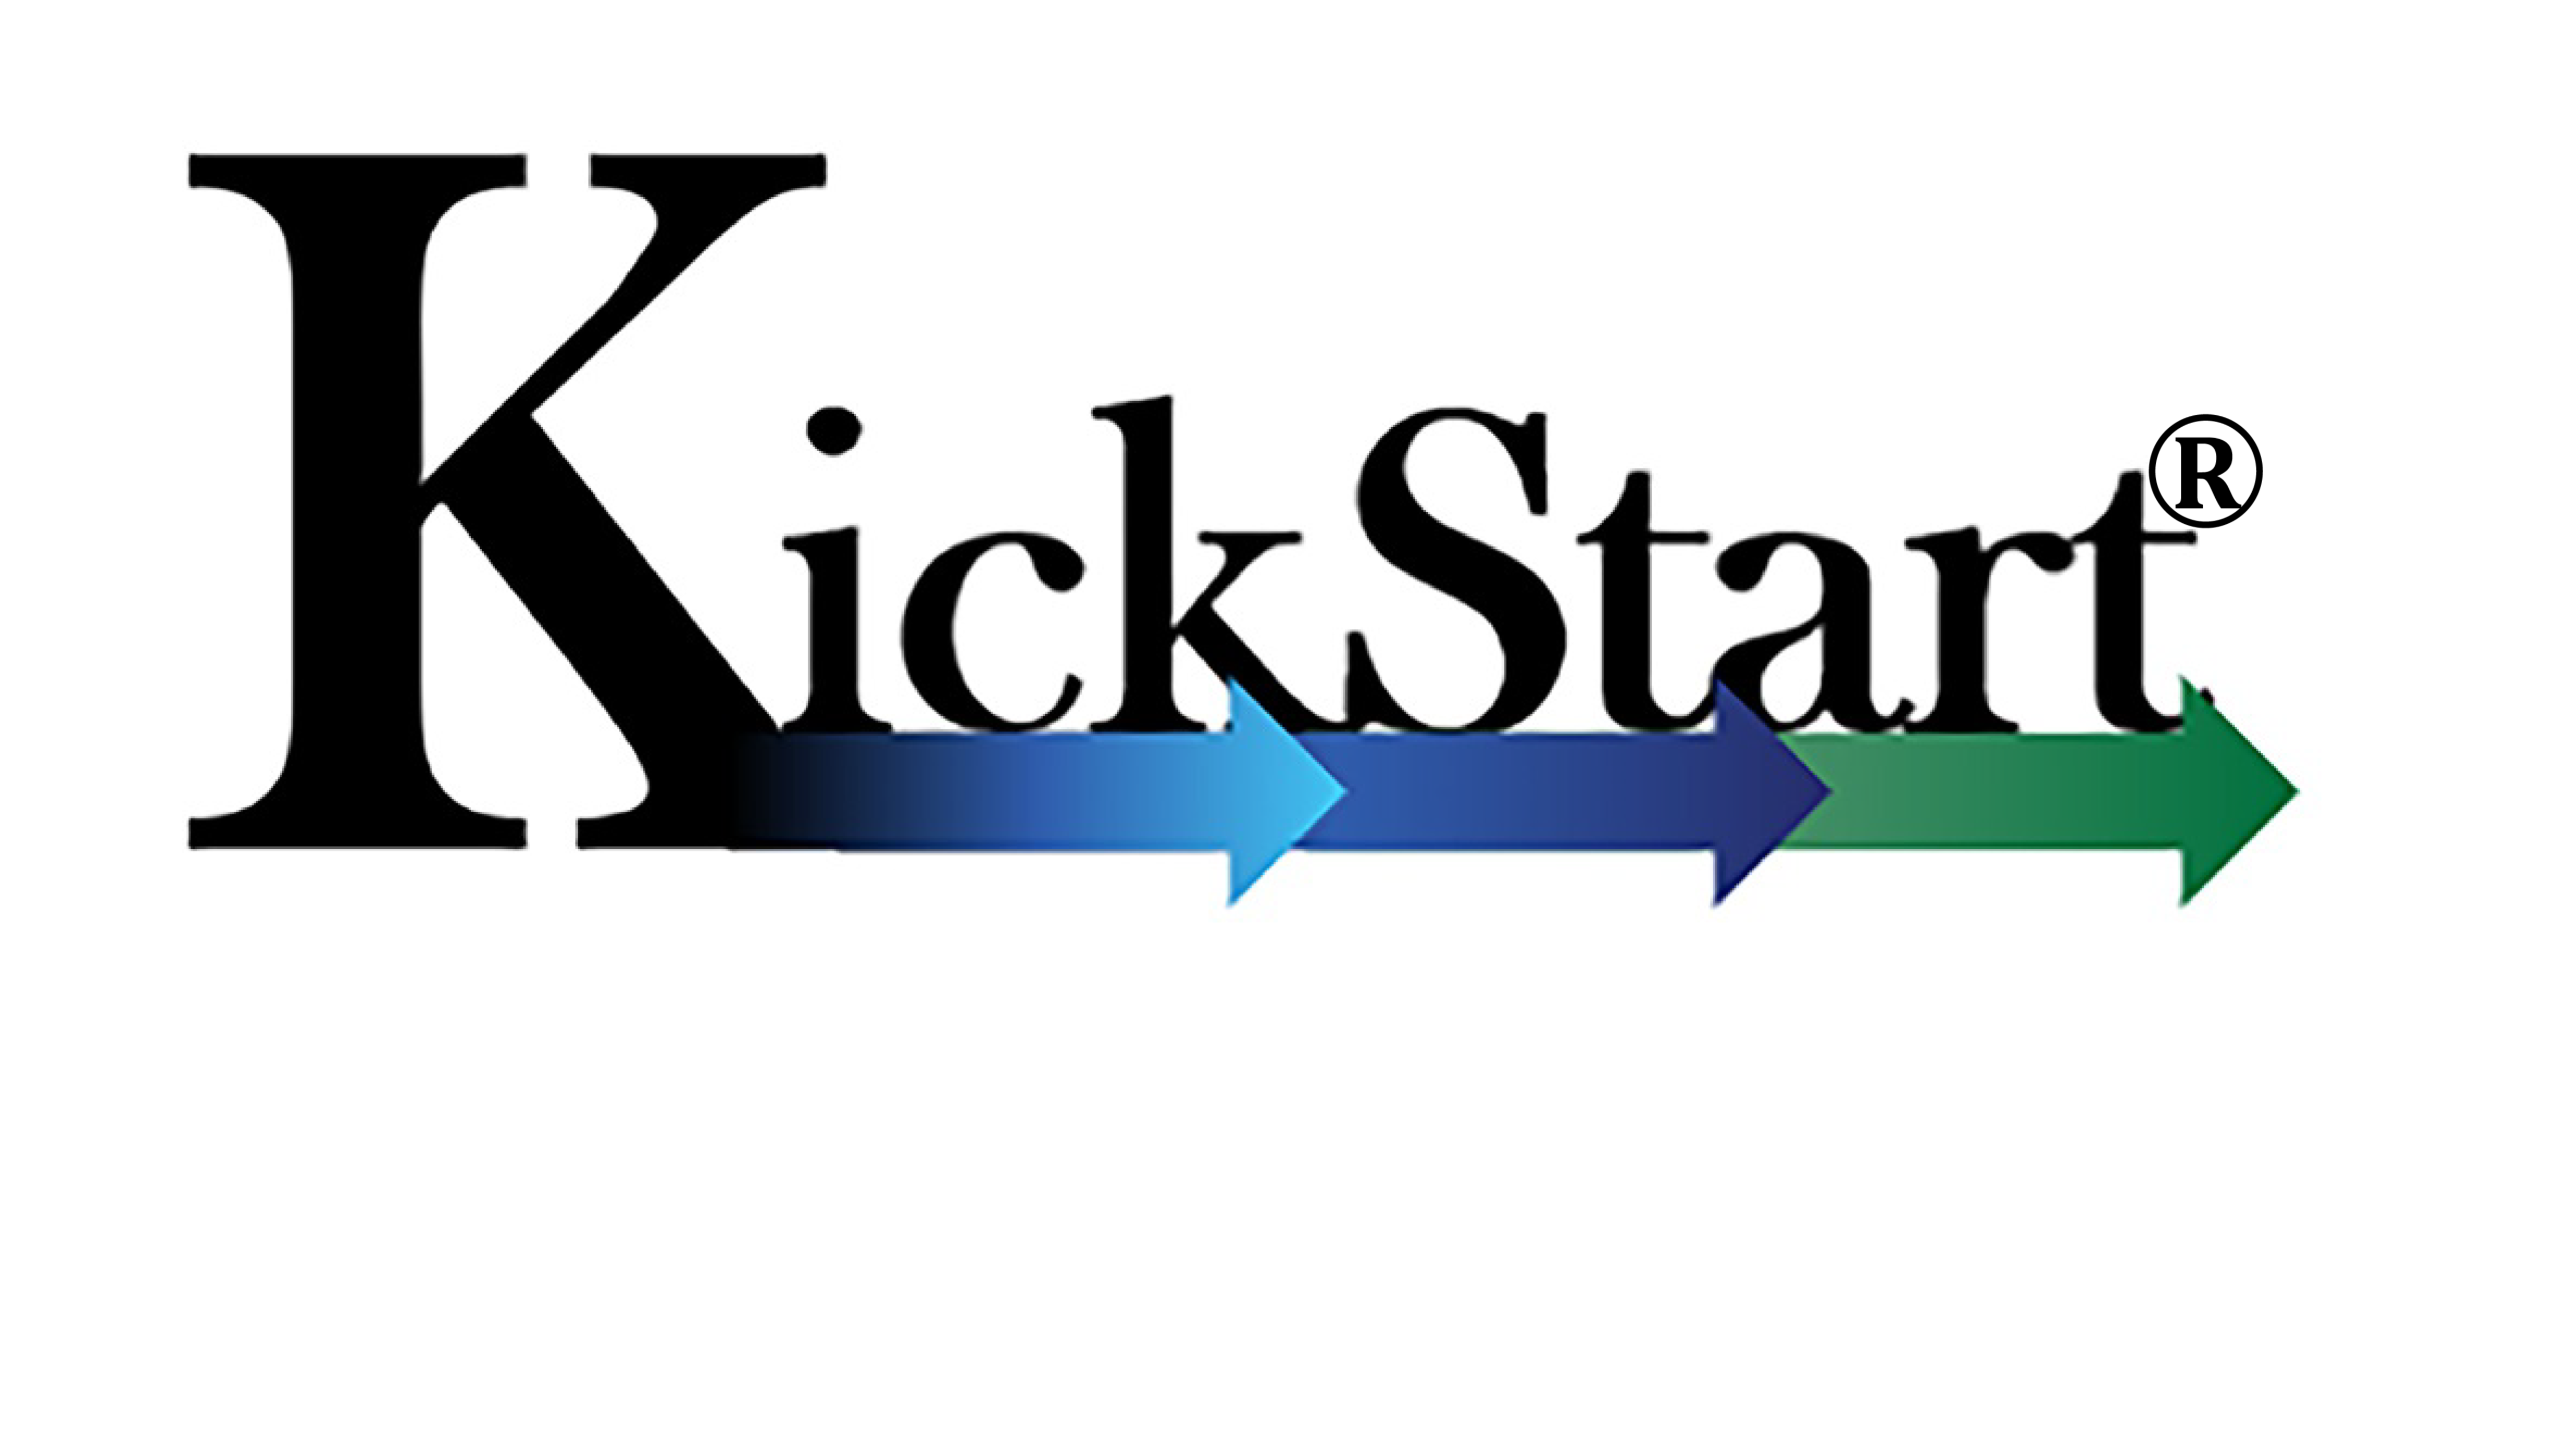 KickStart Program®